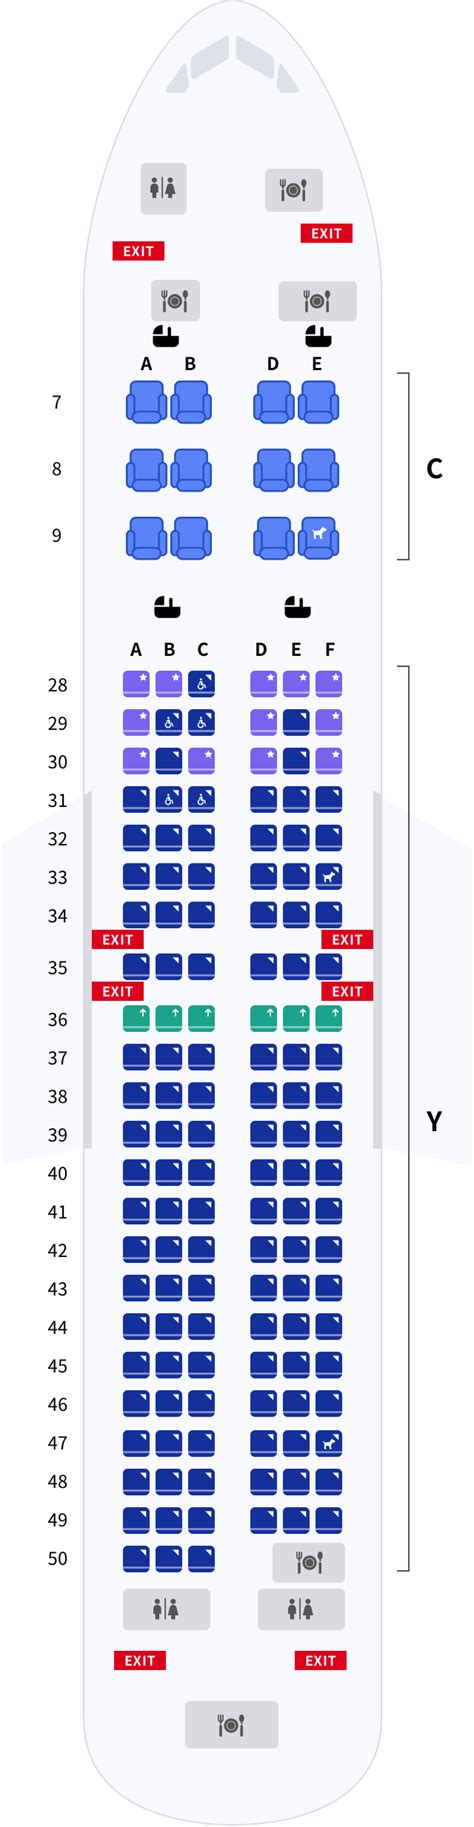 737 800 Seat Map